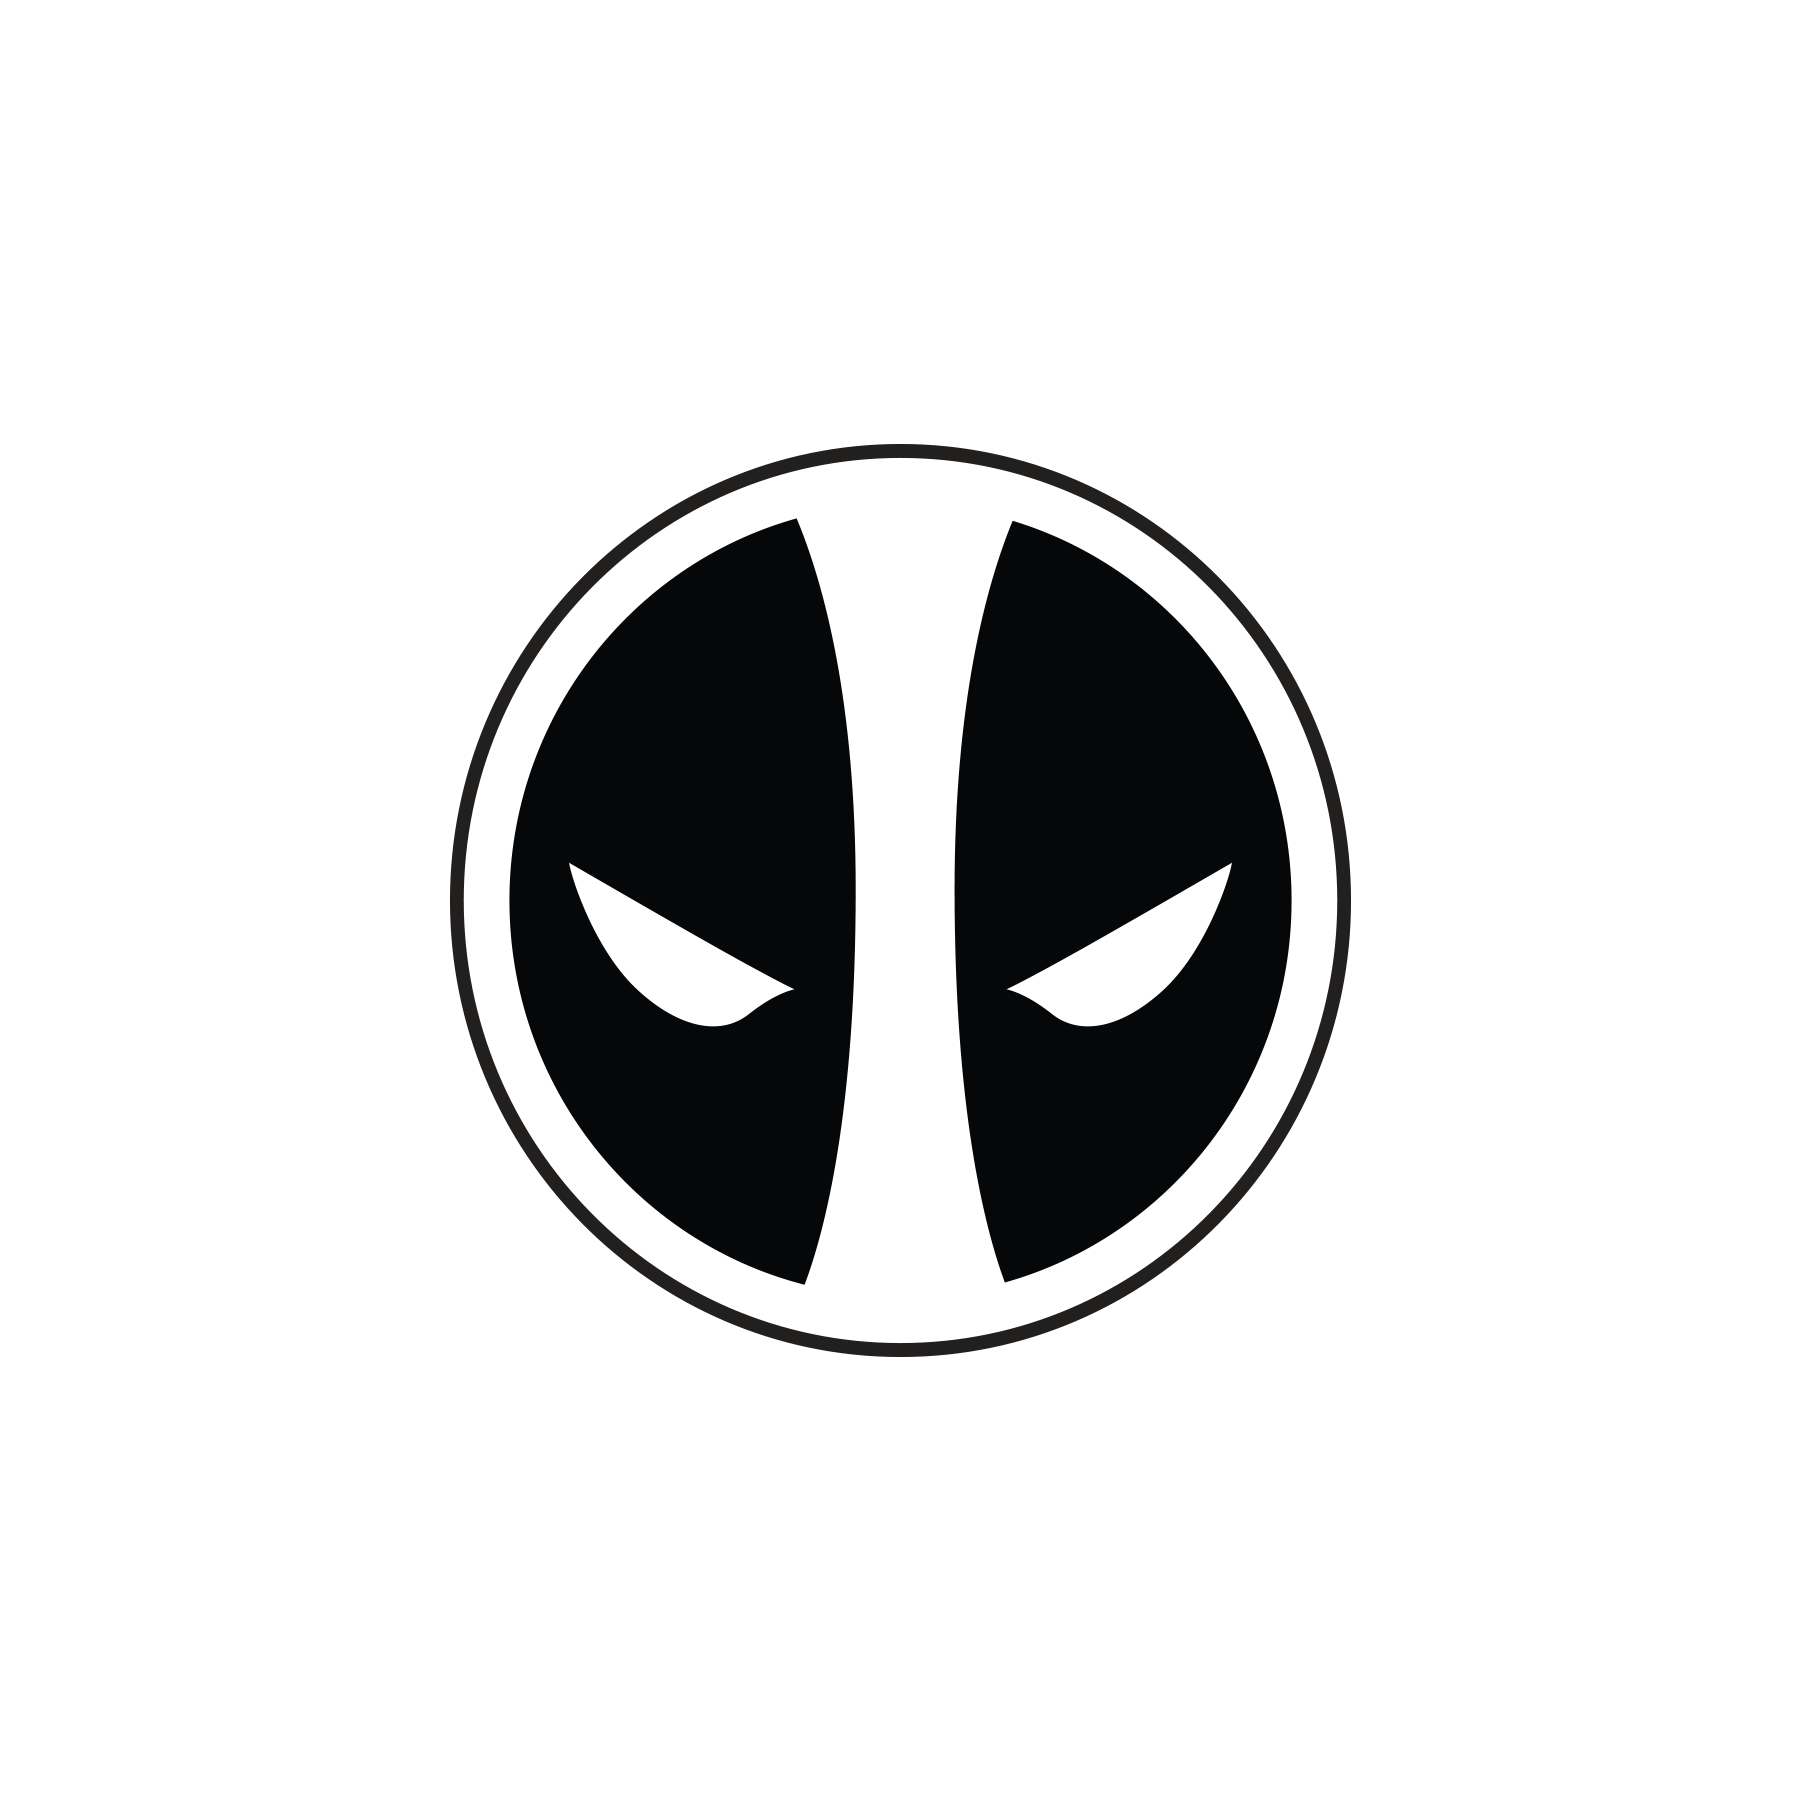 Sticker - Deadpool Splat Logo Red Black Marvel Comic Superhero 4